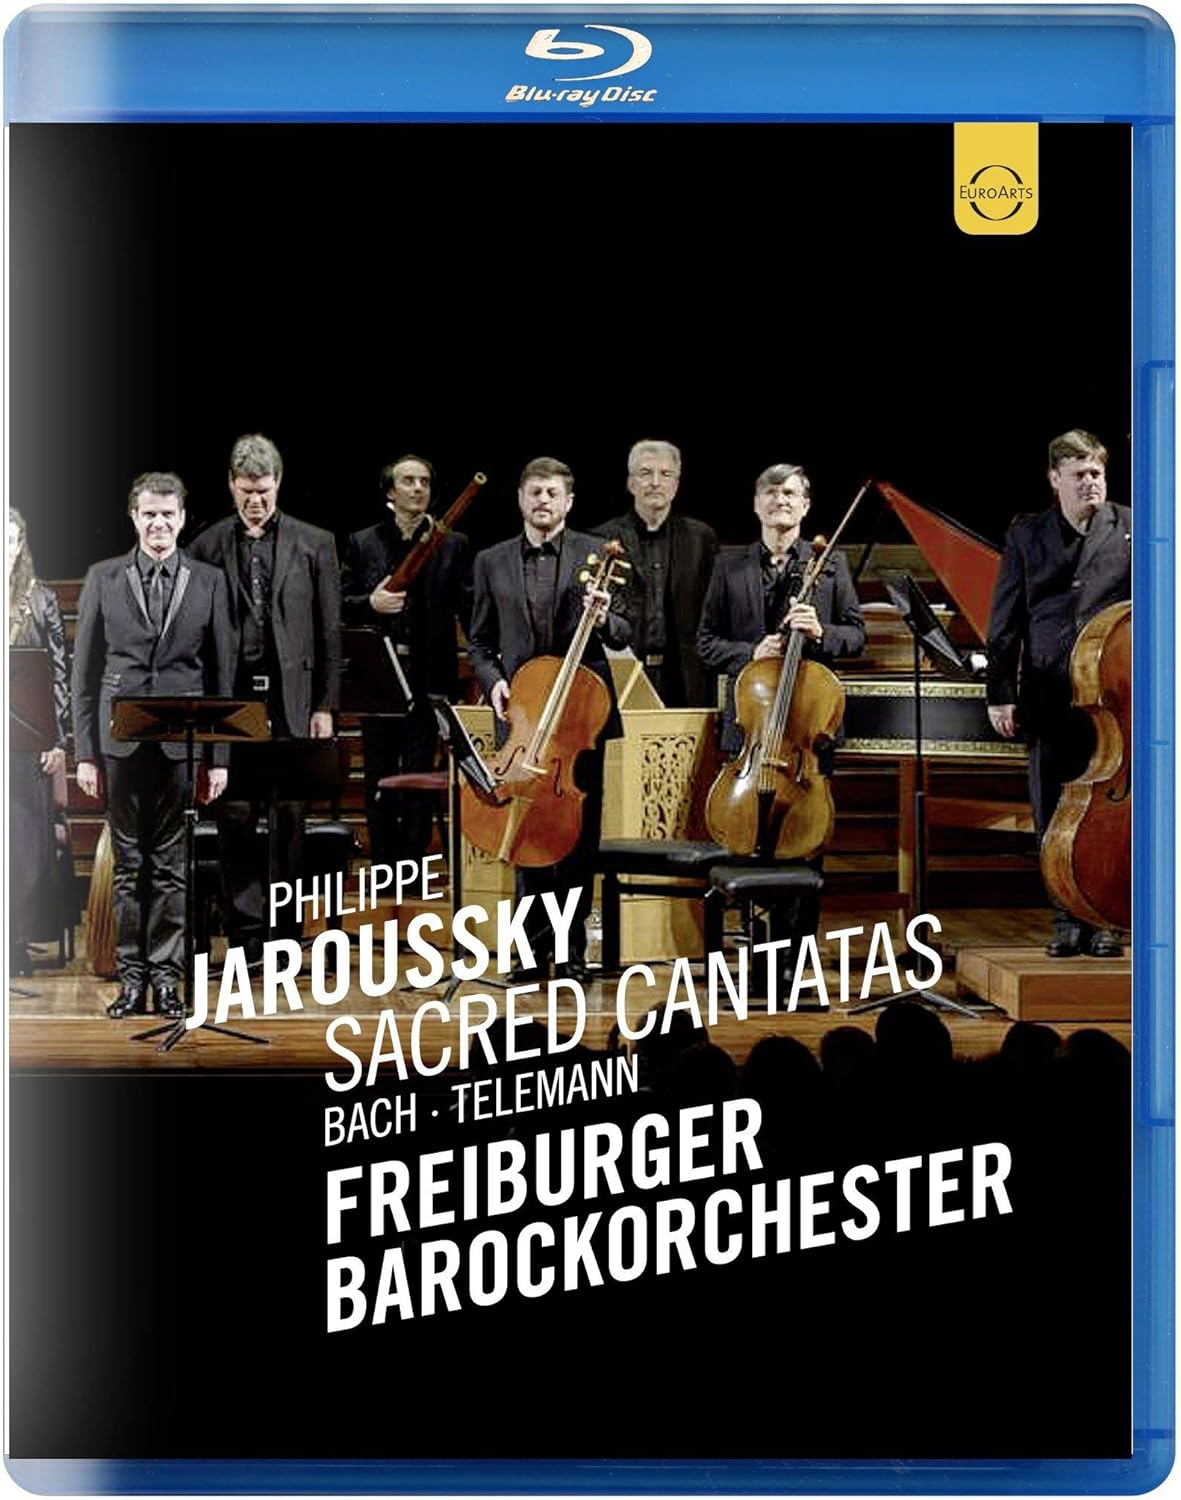 Bach & Telemann: Sacred Cantatas (Blu-ray Disc) | Philippe Jaroussky, Freiburger Barockorchester